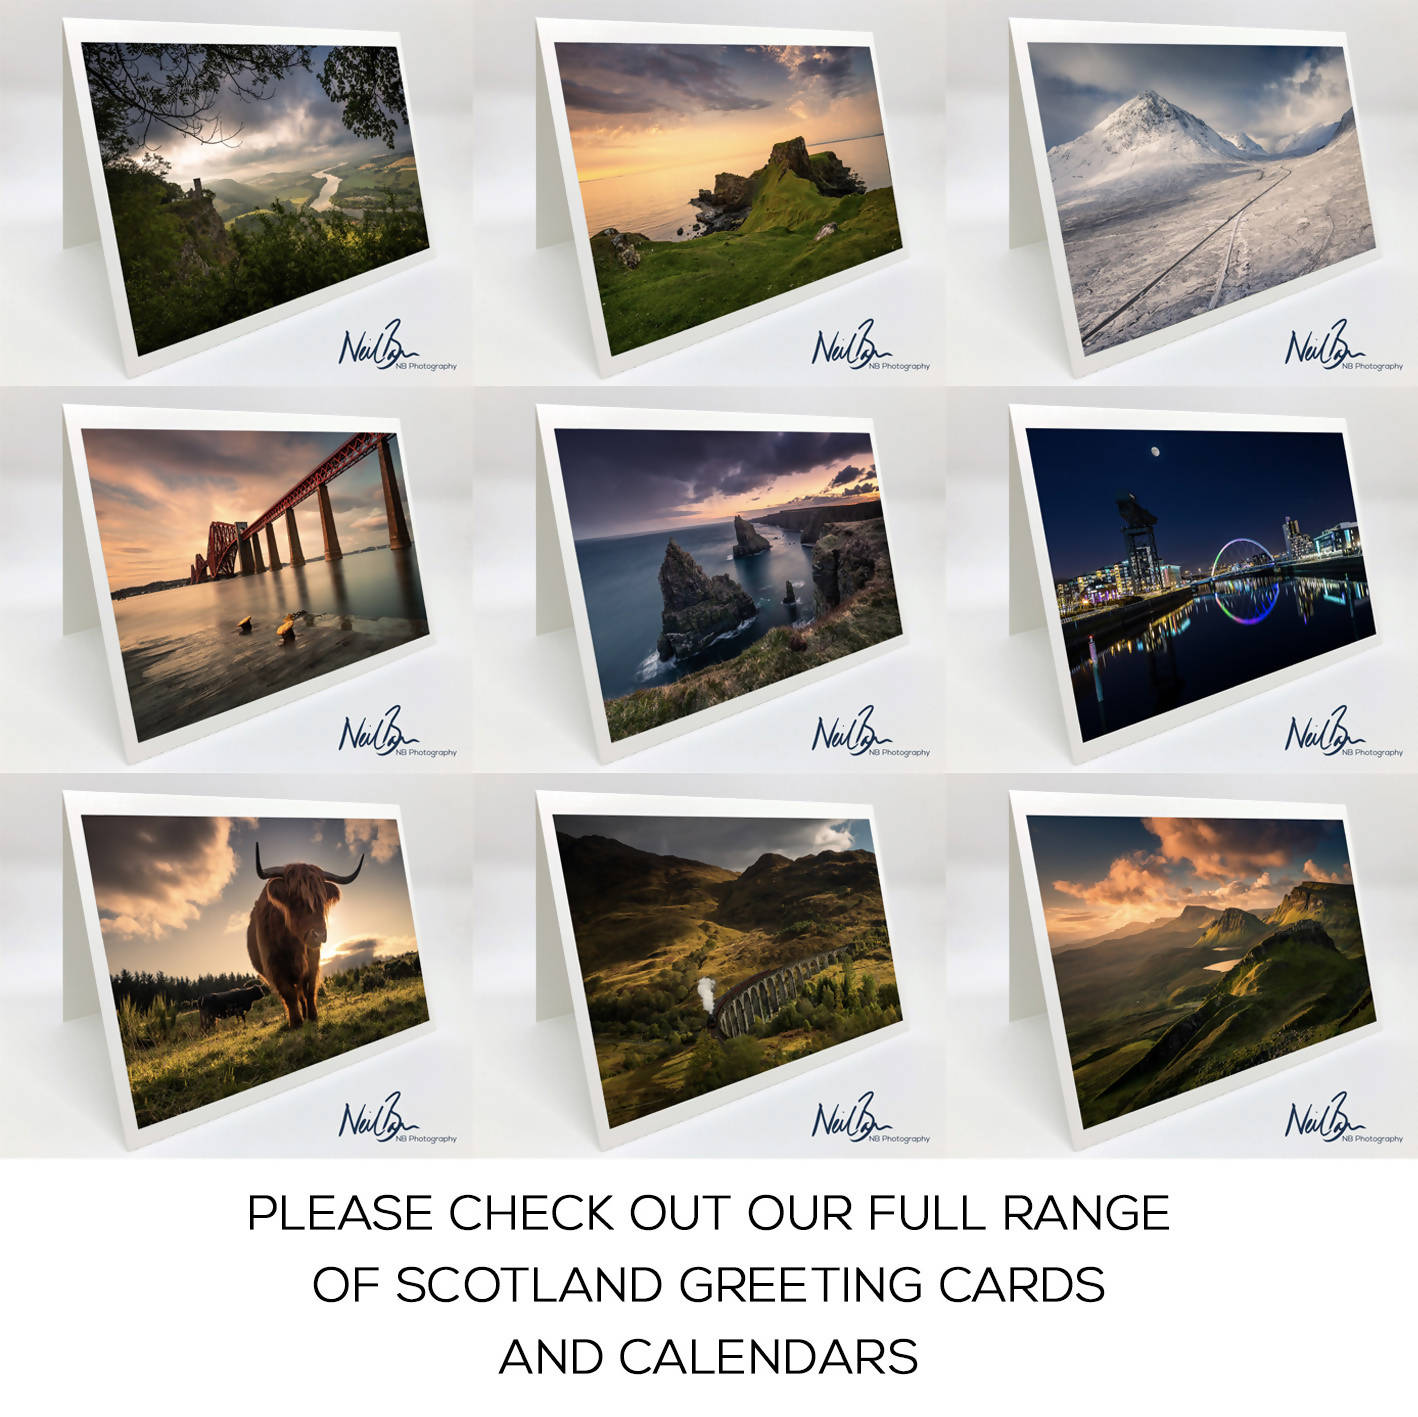 Cuillins from Elgol, Isle of Skye - Scotland Greeting Card - Blank Inside